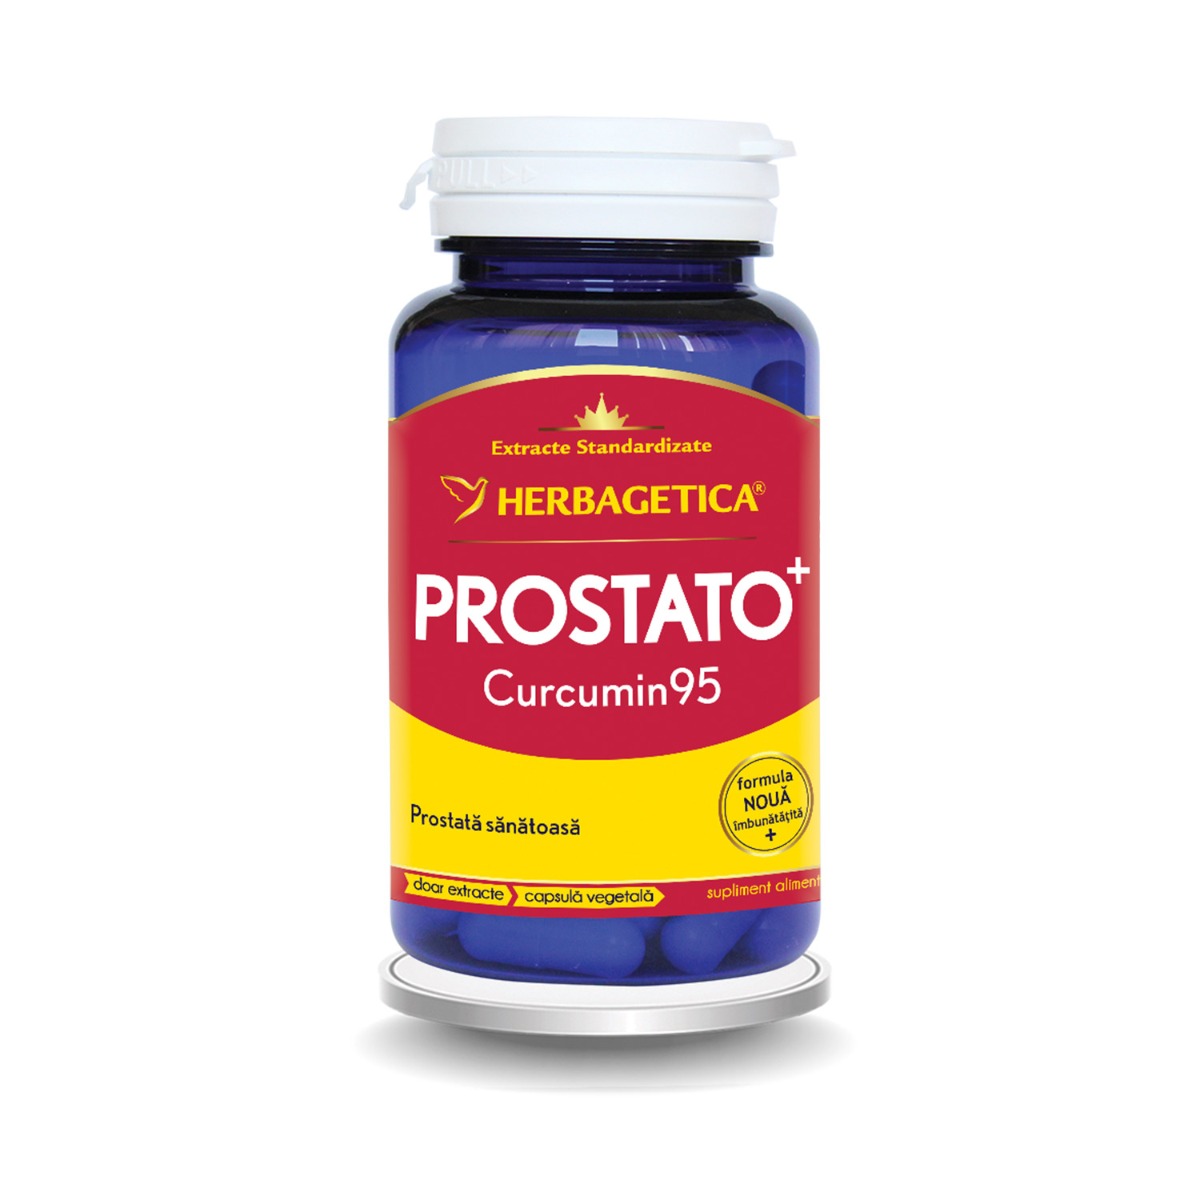 Prostato+ Curcumin95